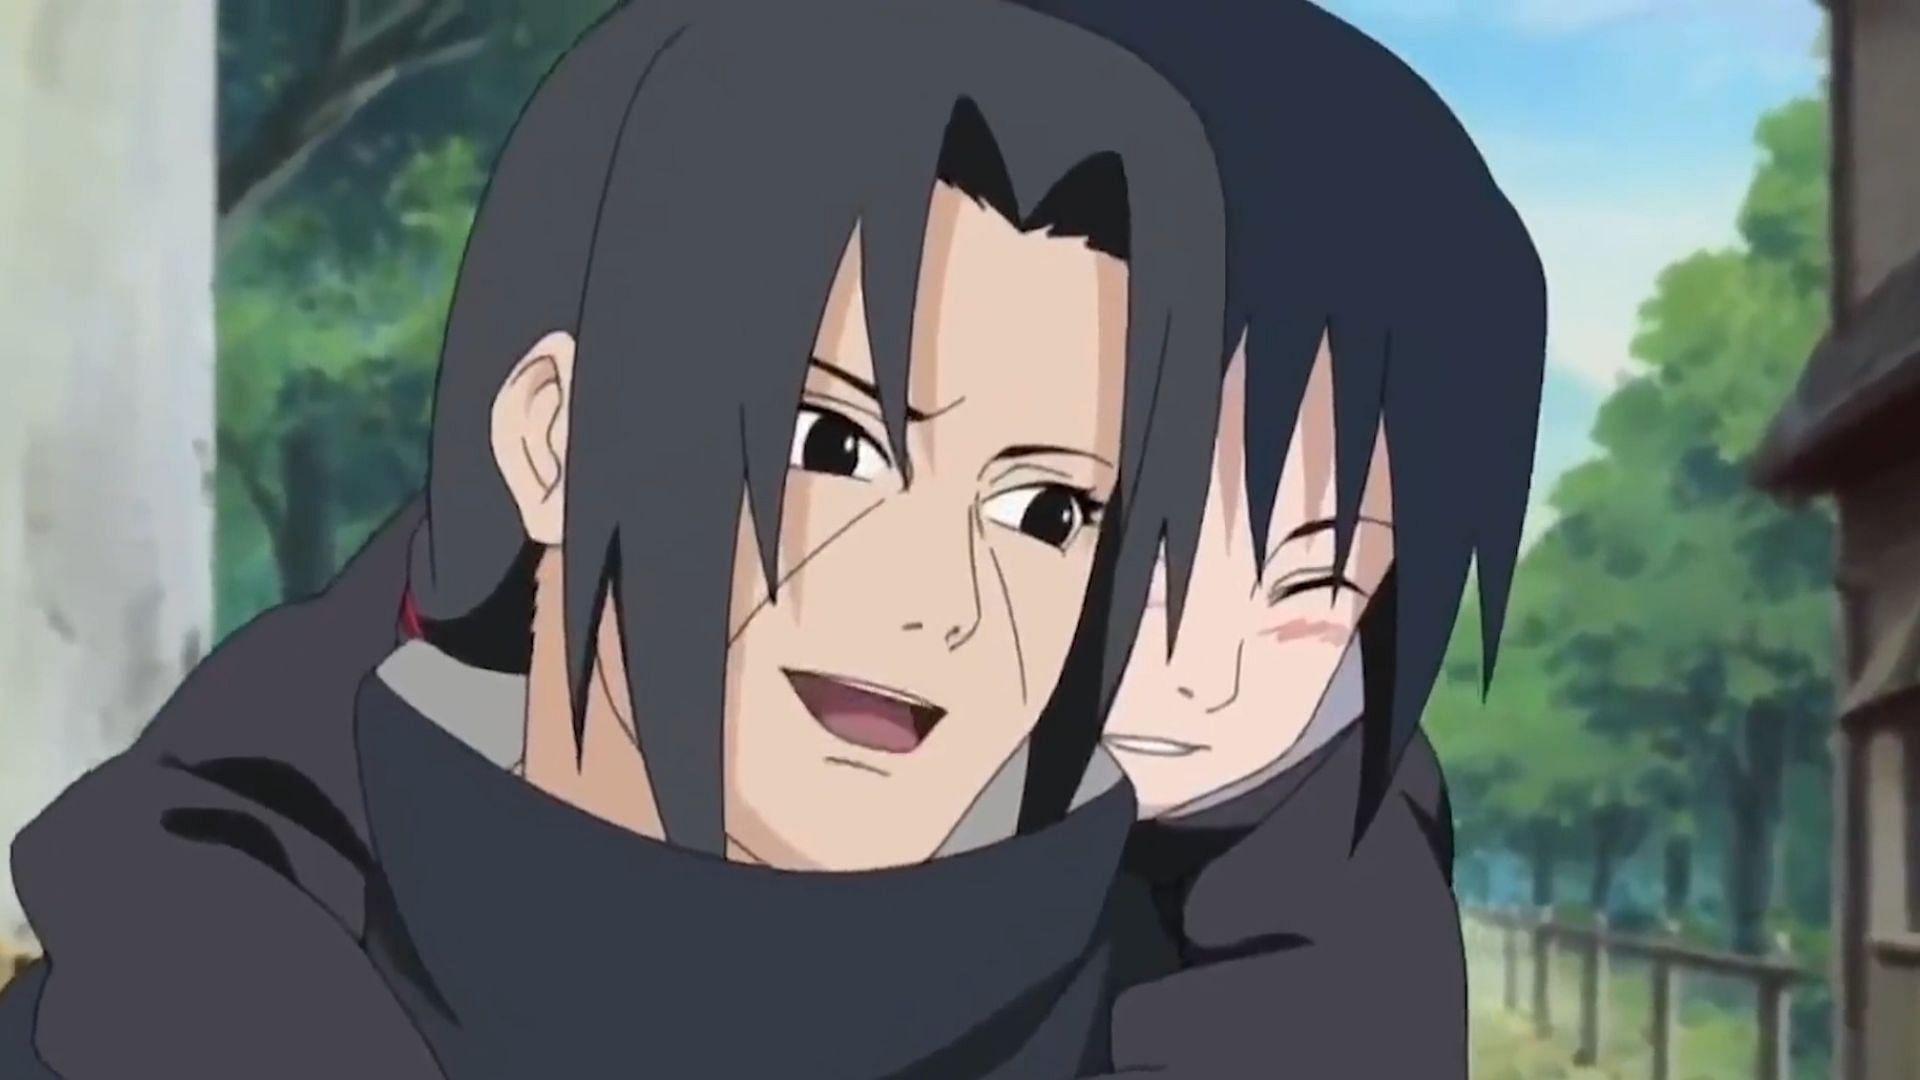 Itachi and Sauske as seen in Naruto (Image via Studio Pierrot)